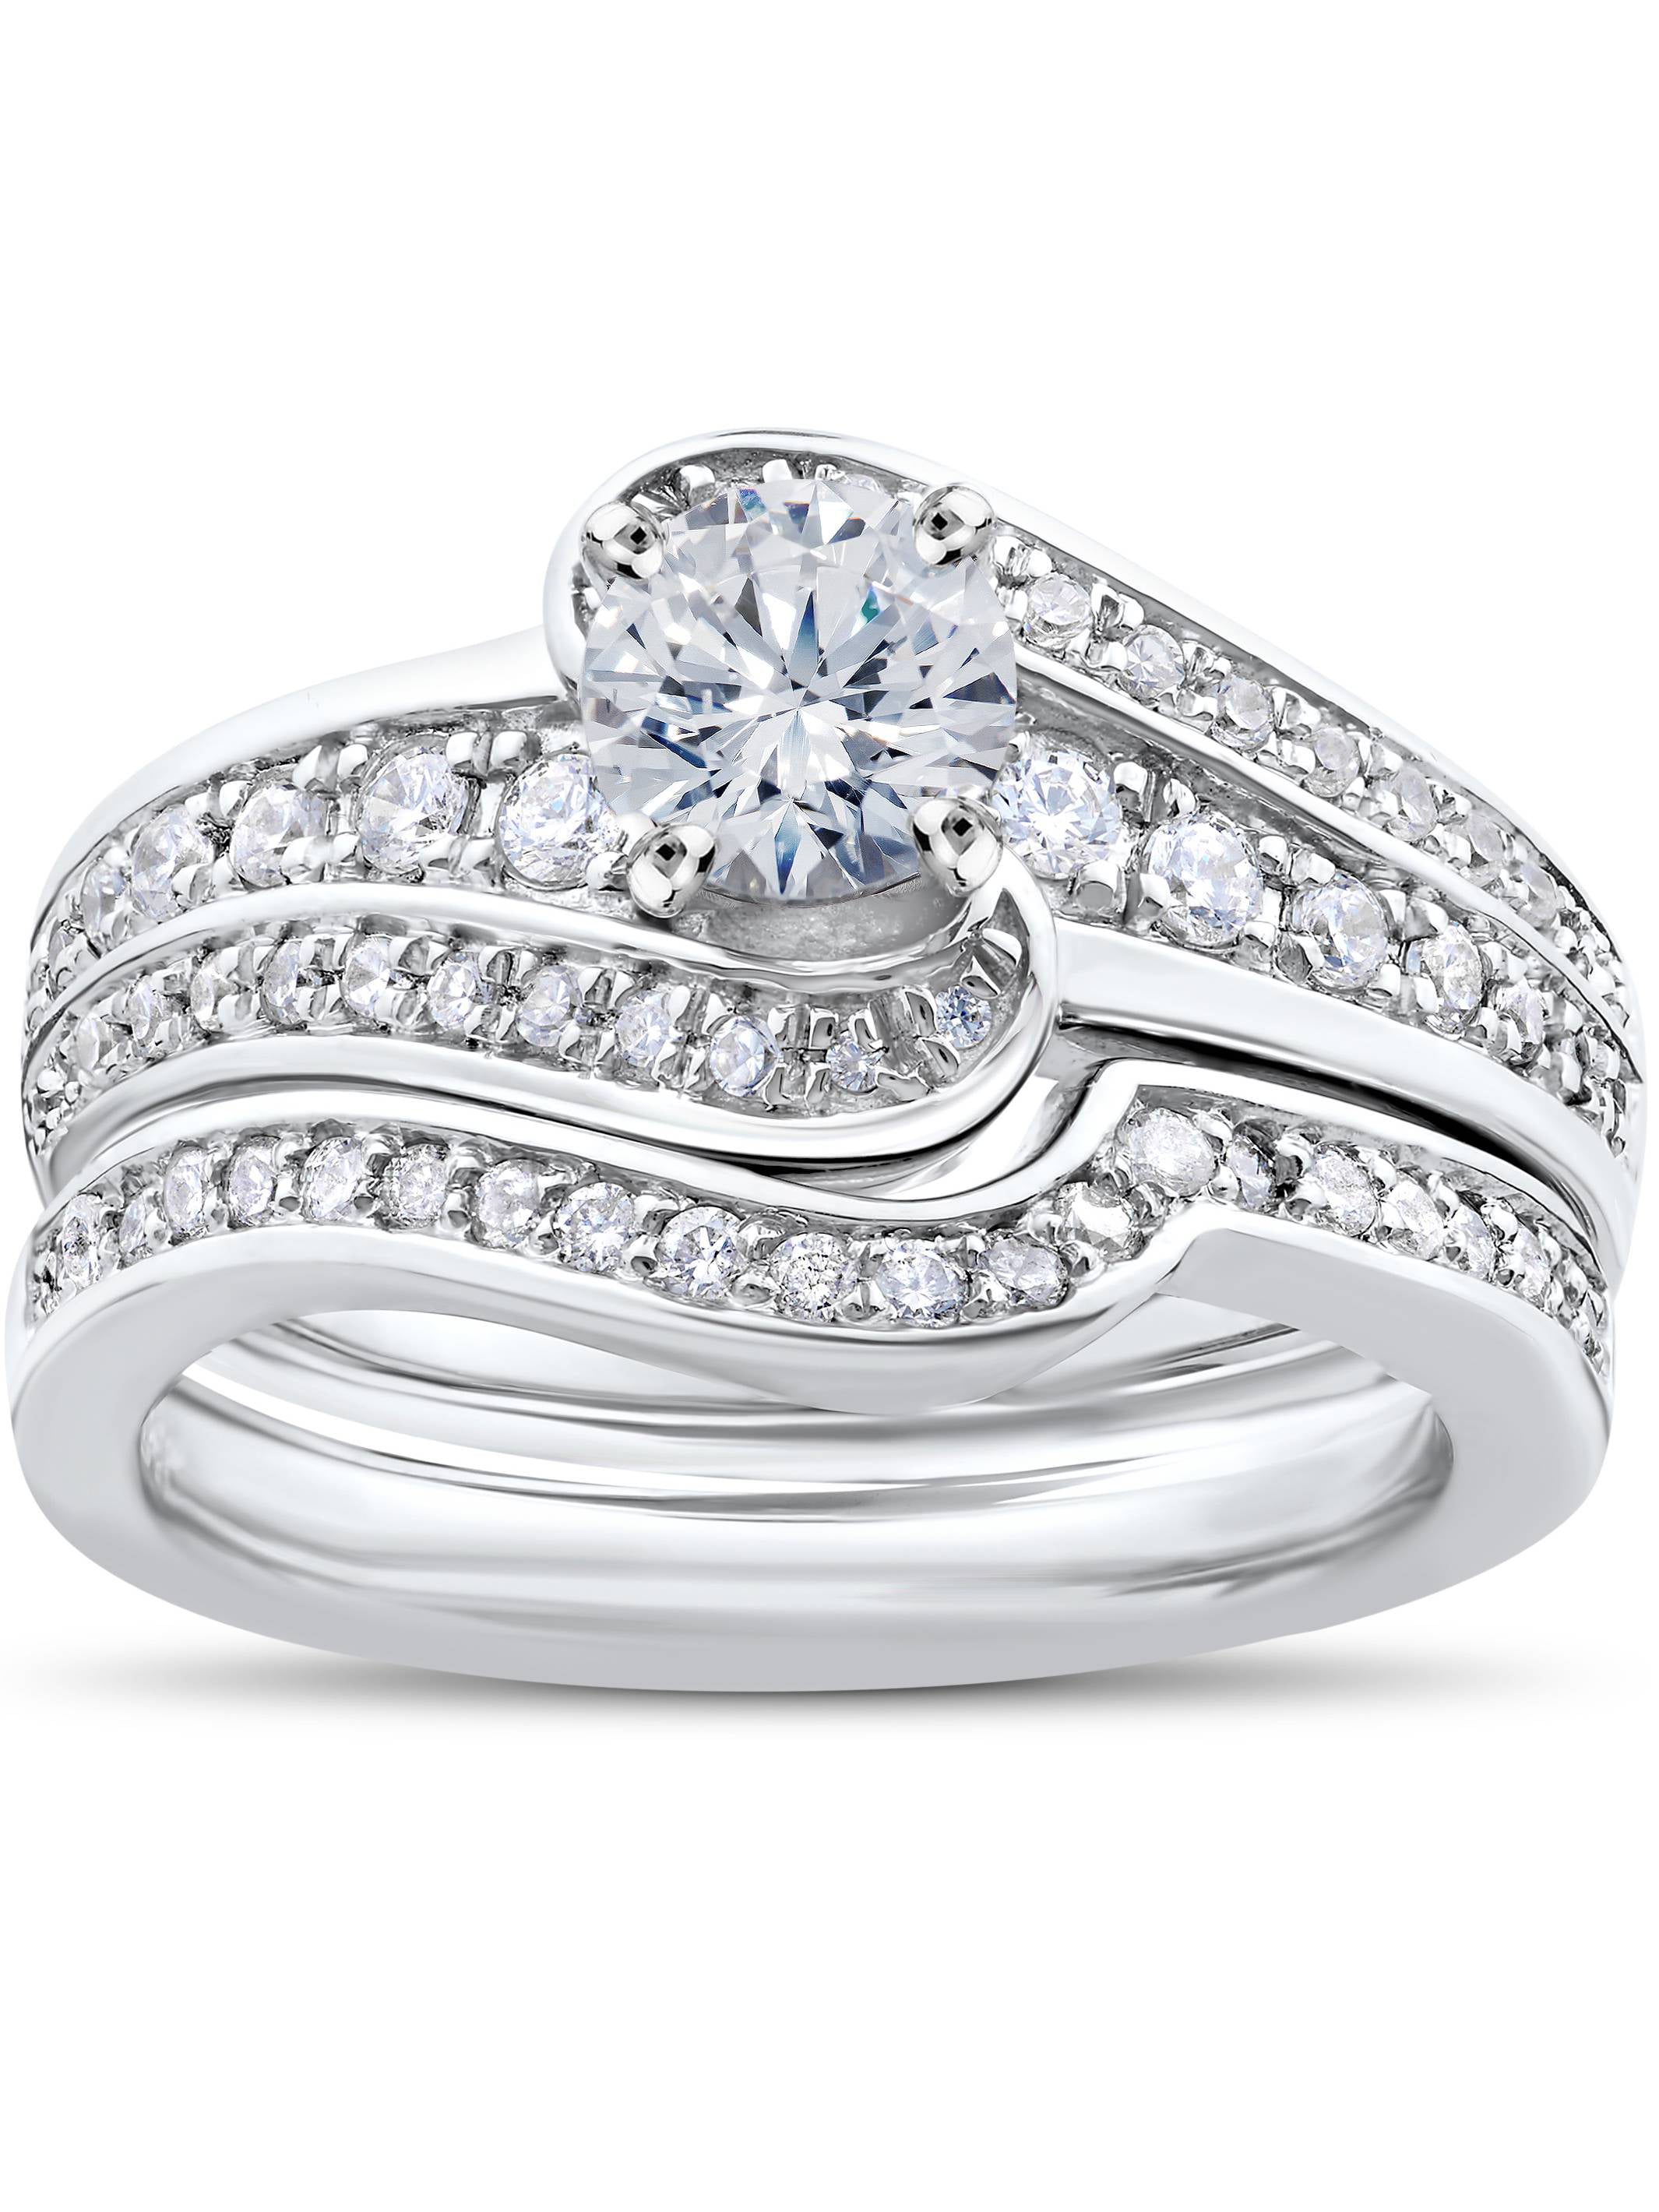 14K White Gold Sterling Silver Diamond Wedding Set Bridal Engagement Rings 